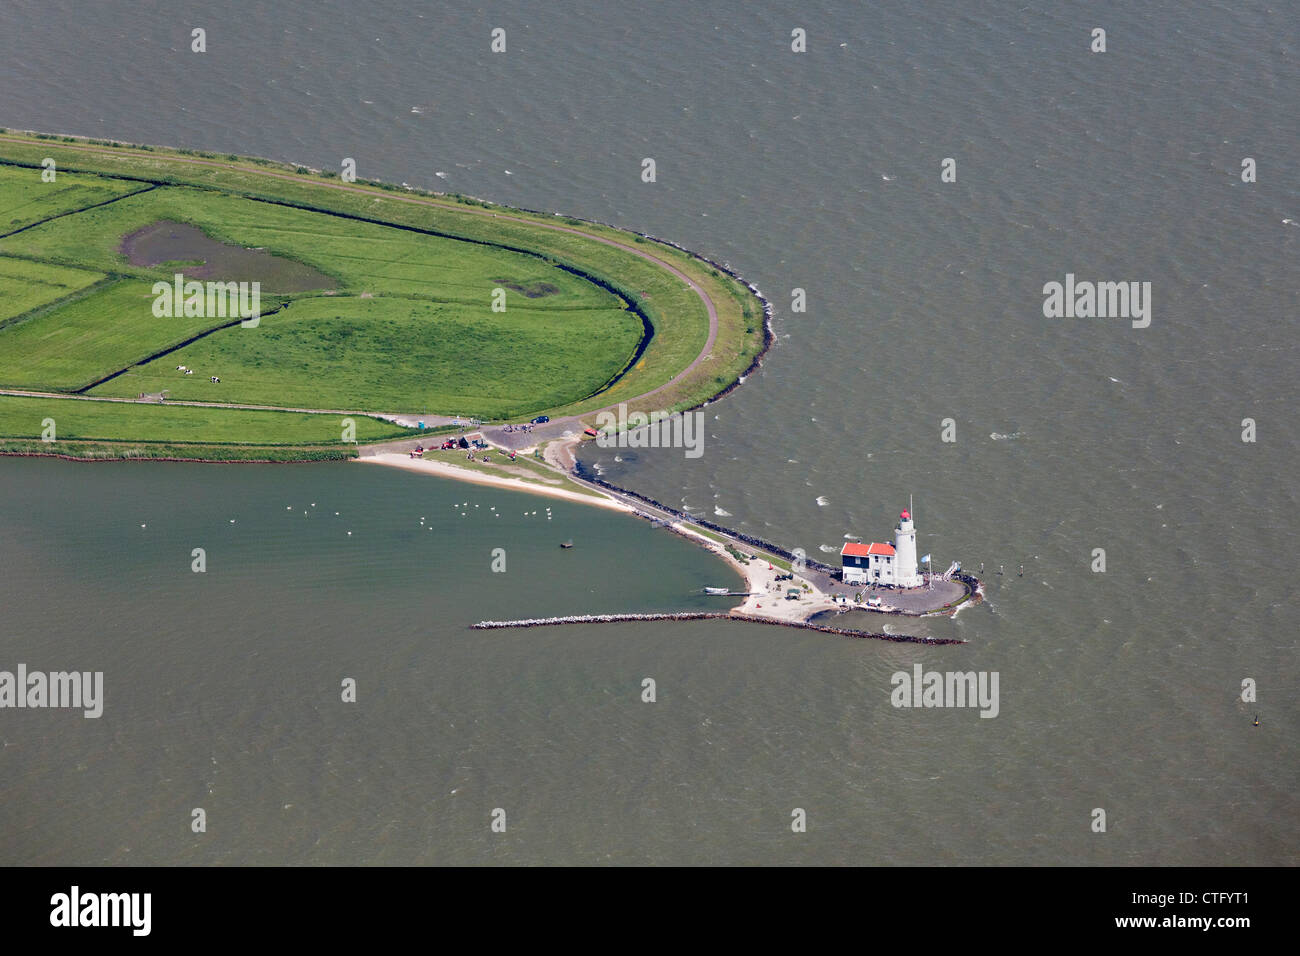 The Netherlands, Marken, Aerial of island and lighthouse called Paard van Marken (Horse of Marken). Stock Photo